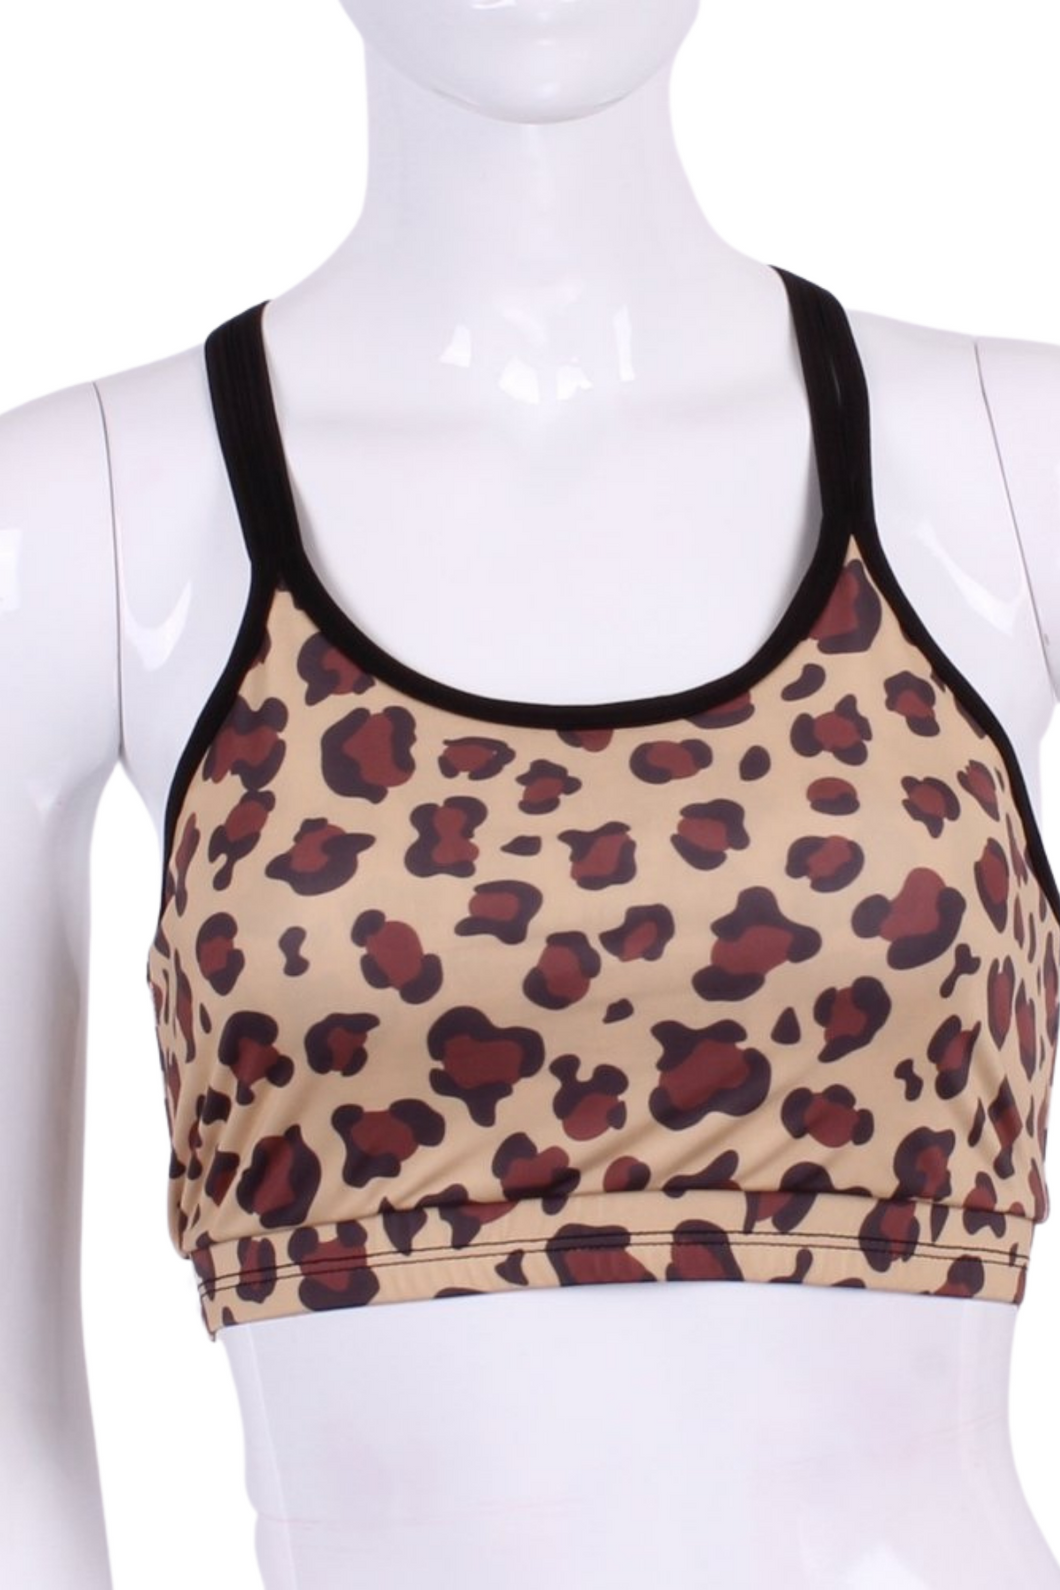 Leopard LOVE “U” Bra - I LOVE MY DOUBLES PARTNER!!!